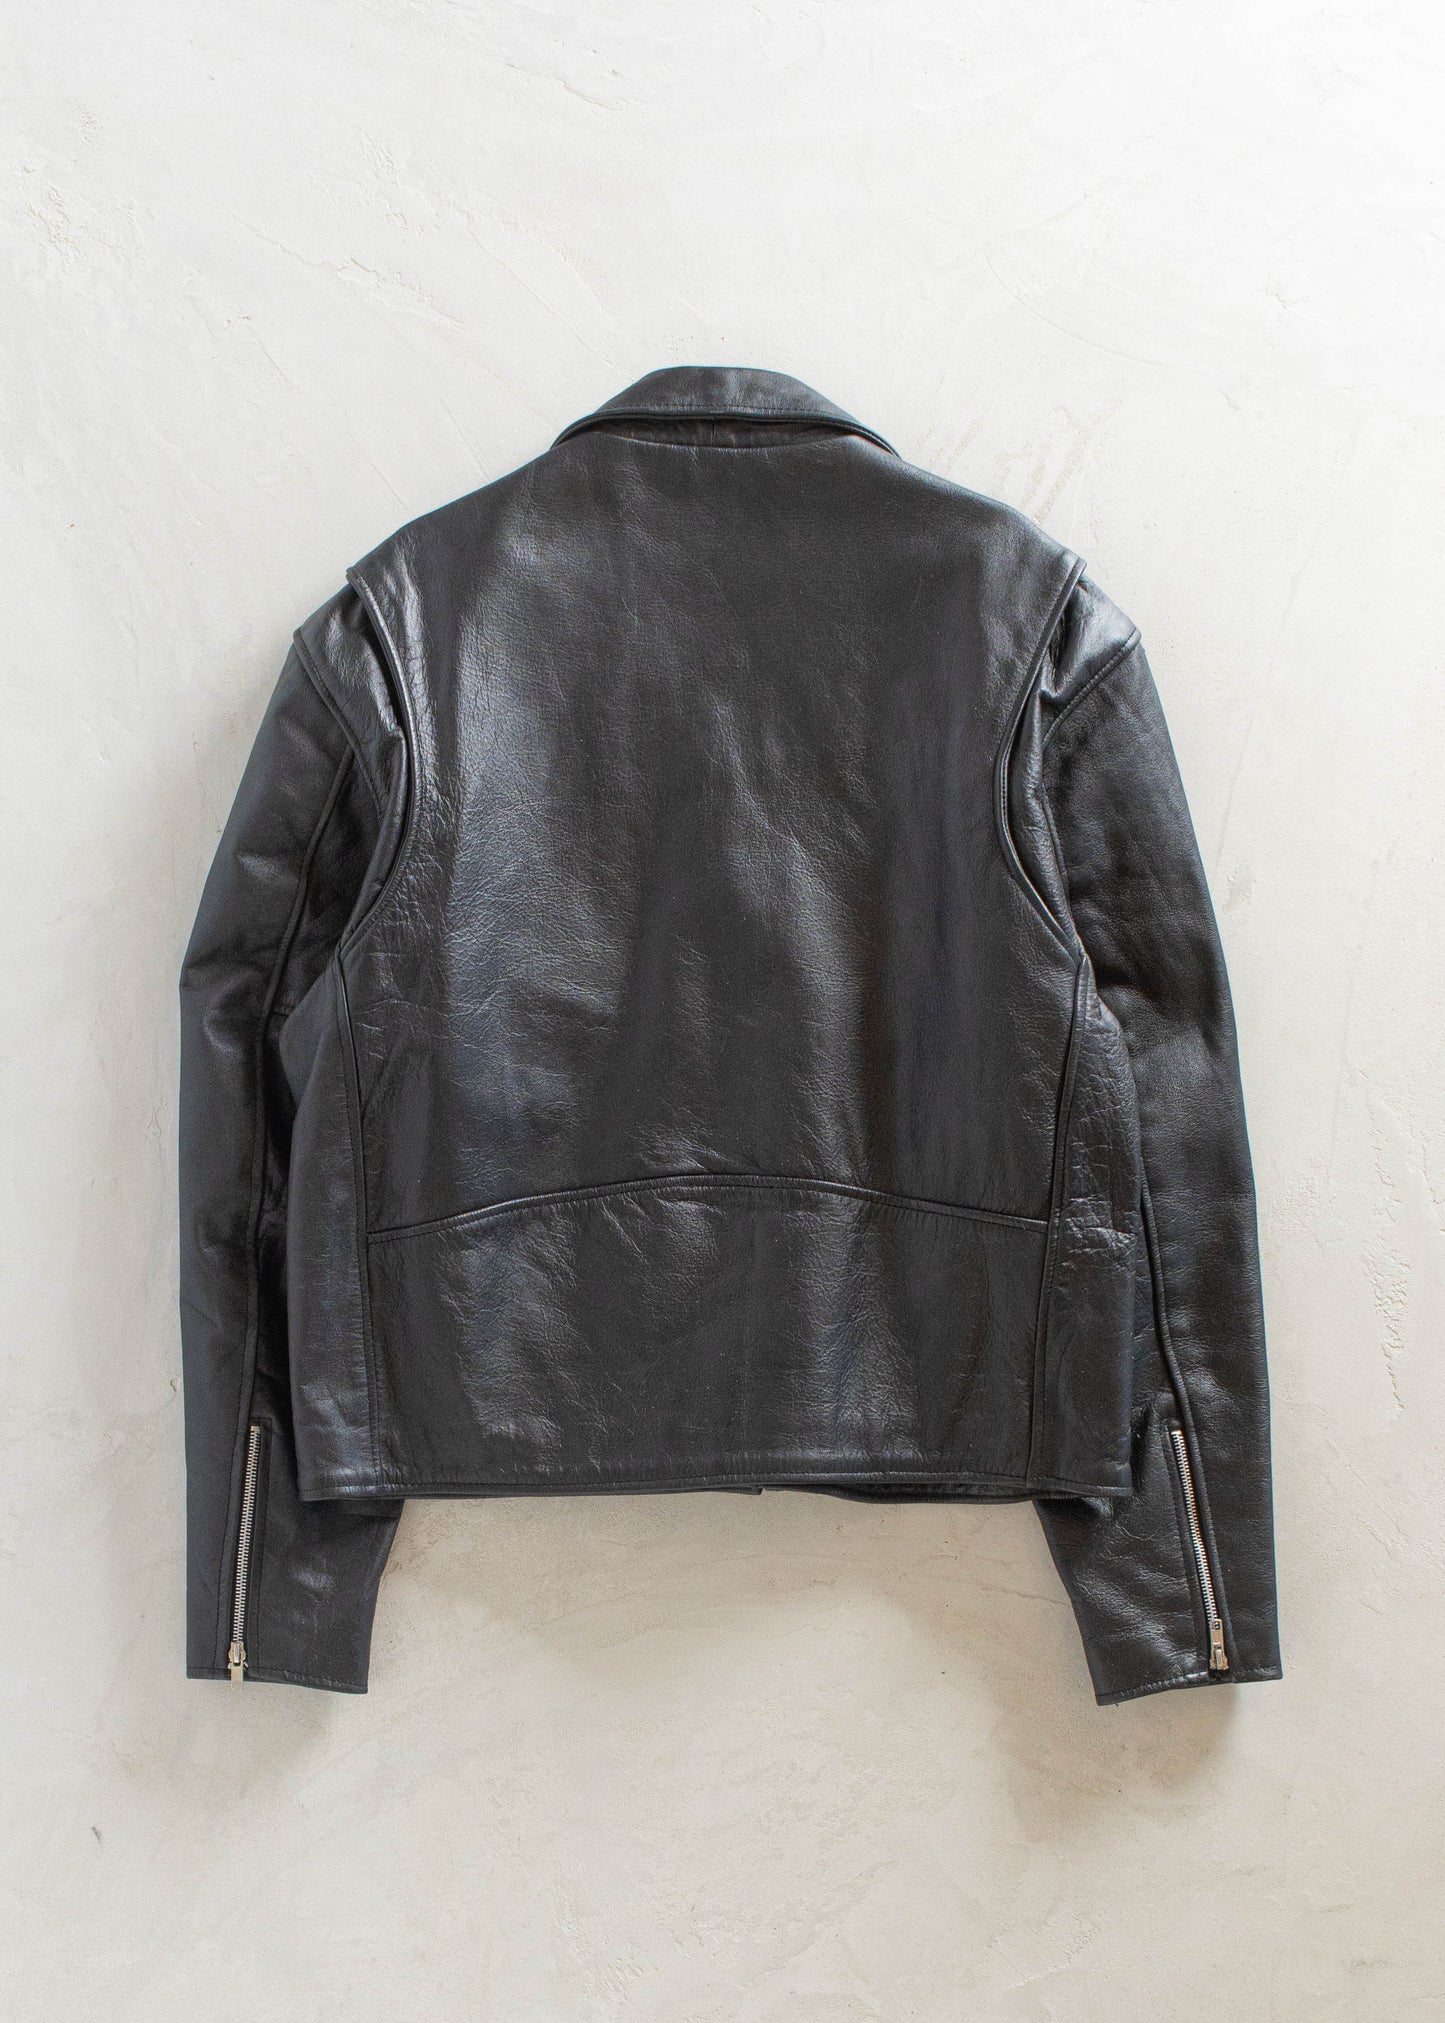 1980s Zony Inc Leather Moto Jacket Size M/L